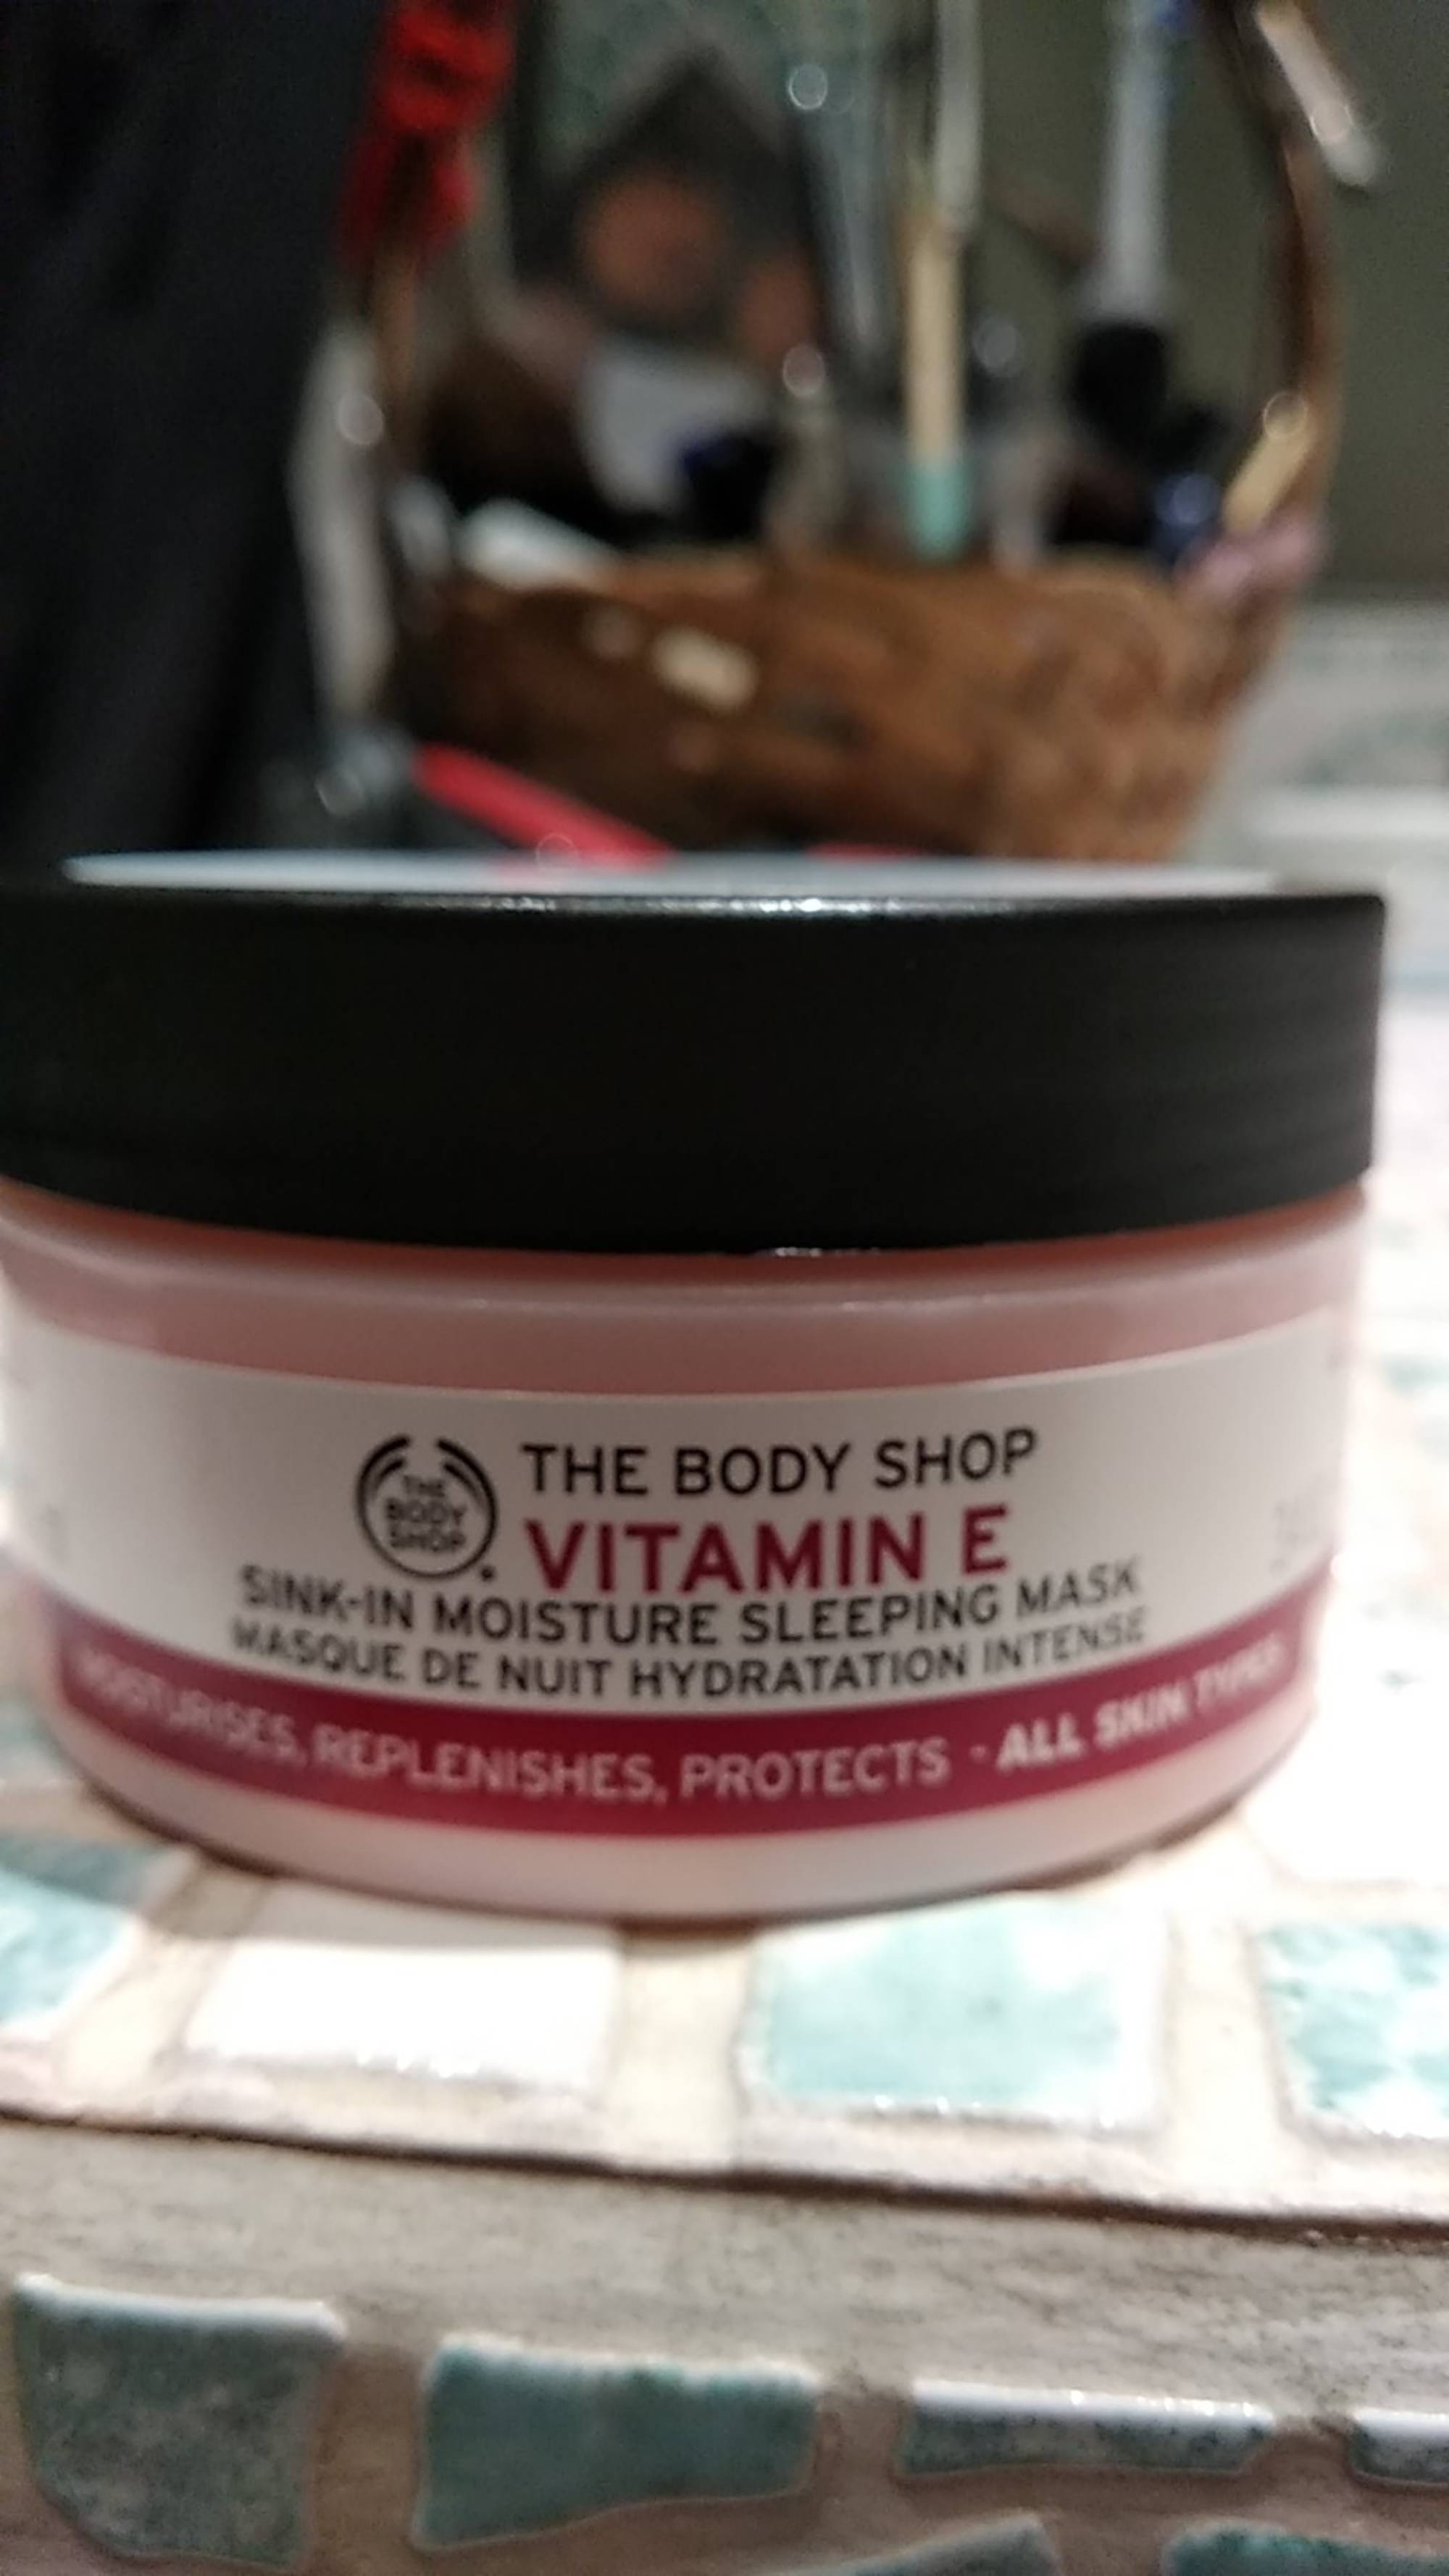 THE BODY SHOP - Vitamin E - Masque de nuit hydratation intense